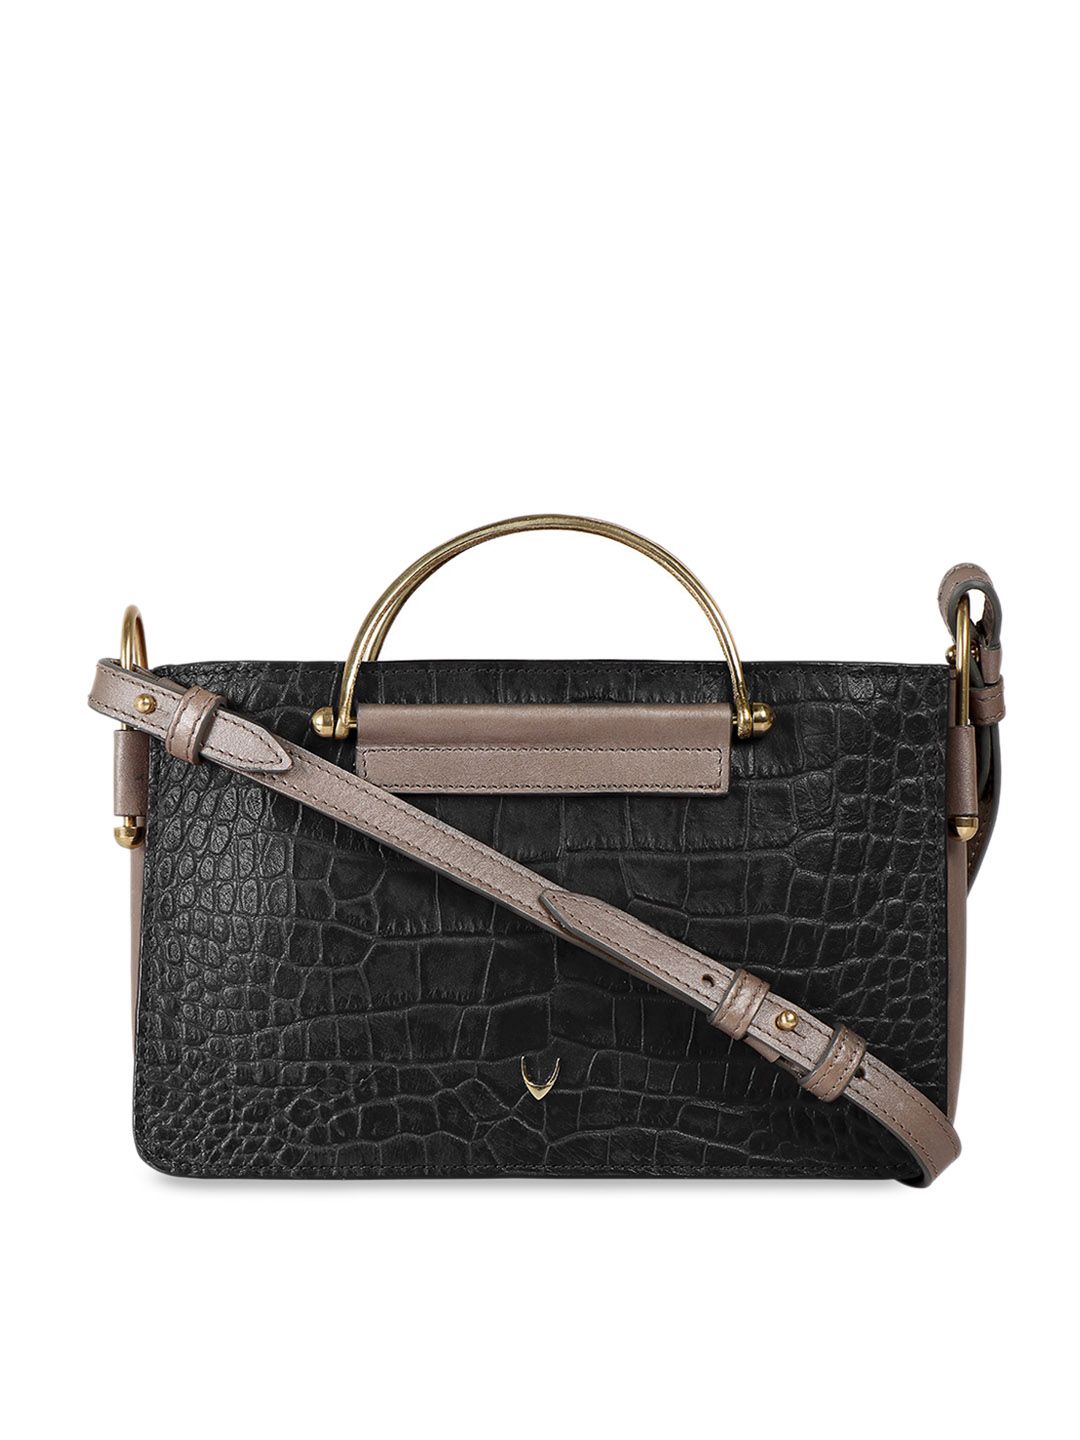 Hidesign Black Crocodile Skin Textured Leather Handheld Bag Price in India